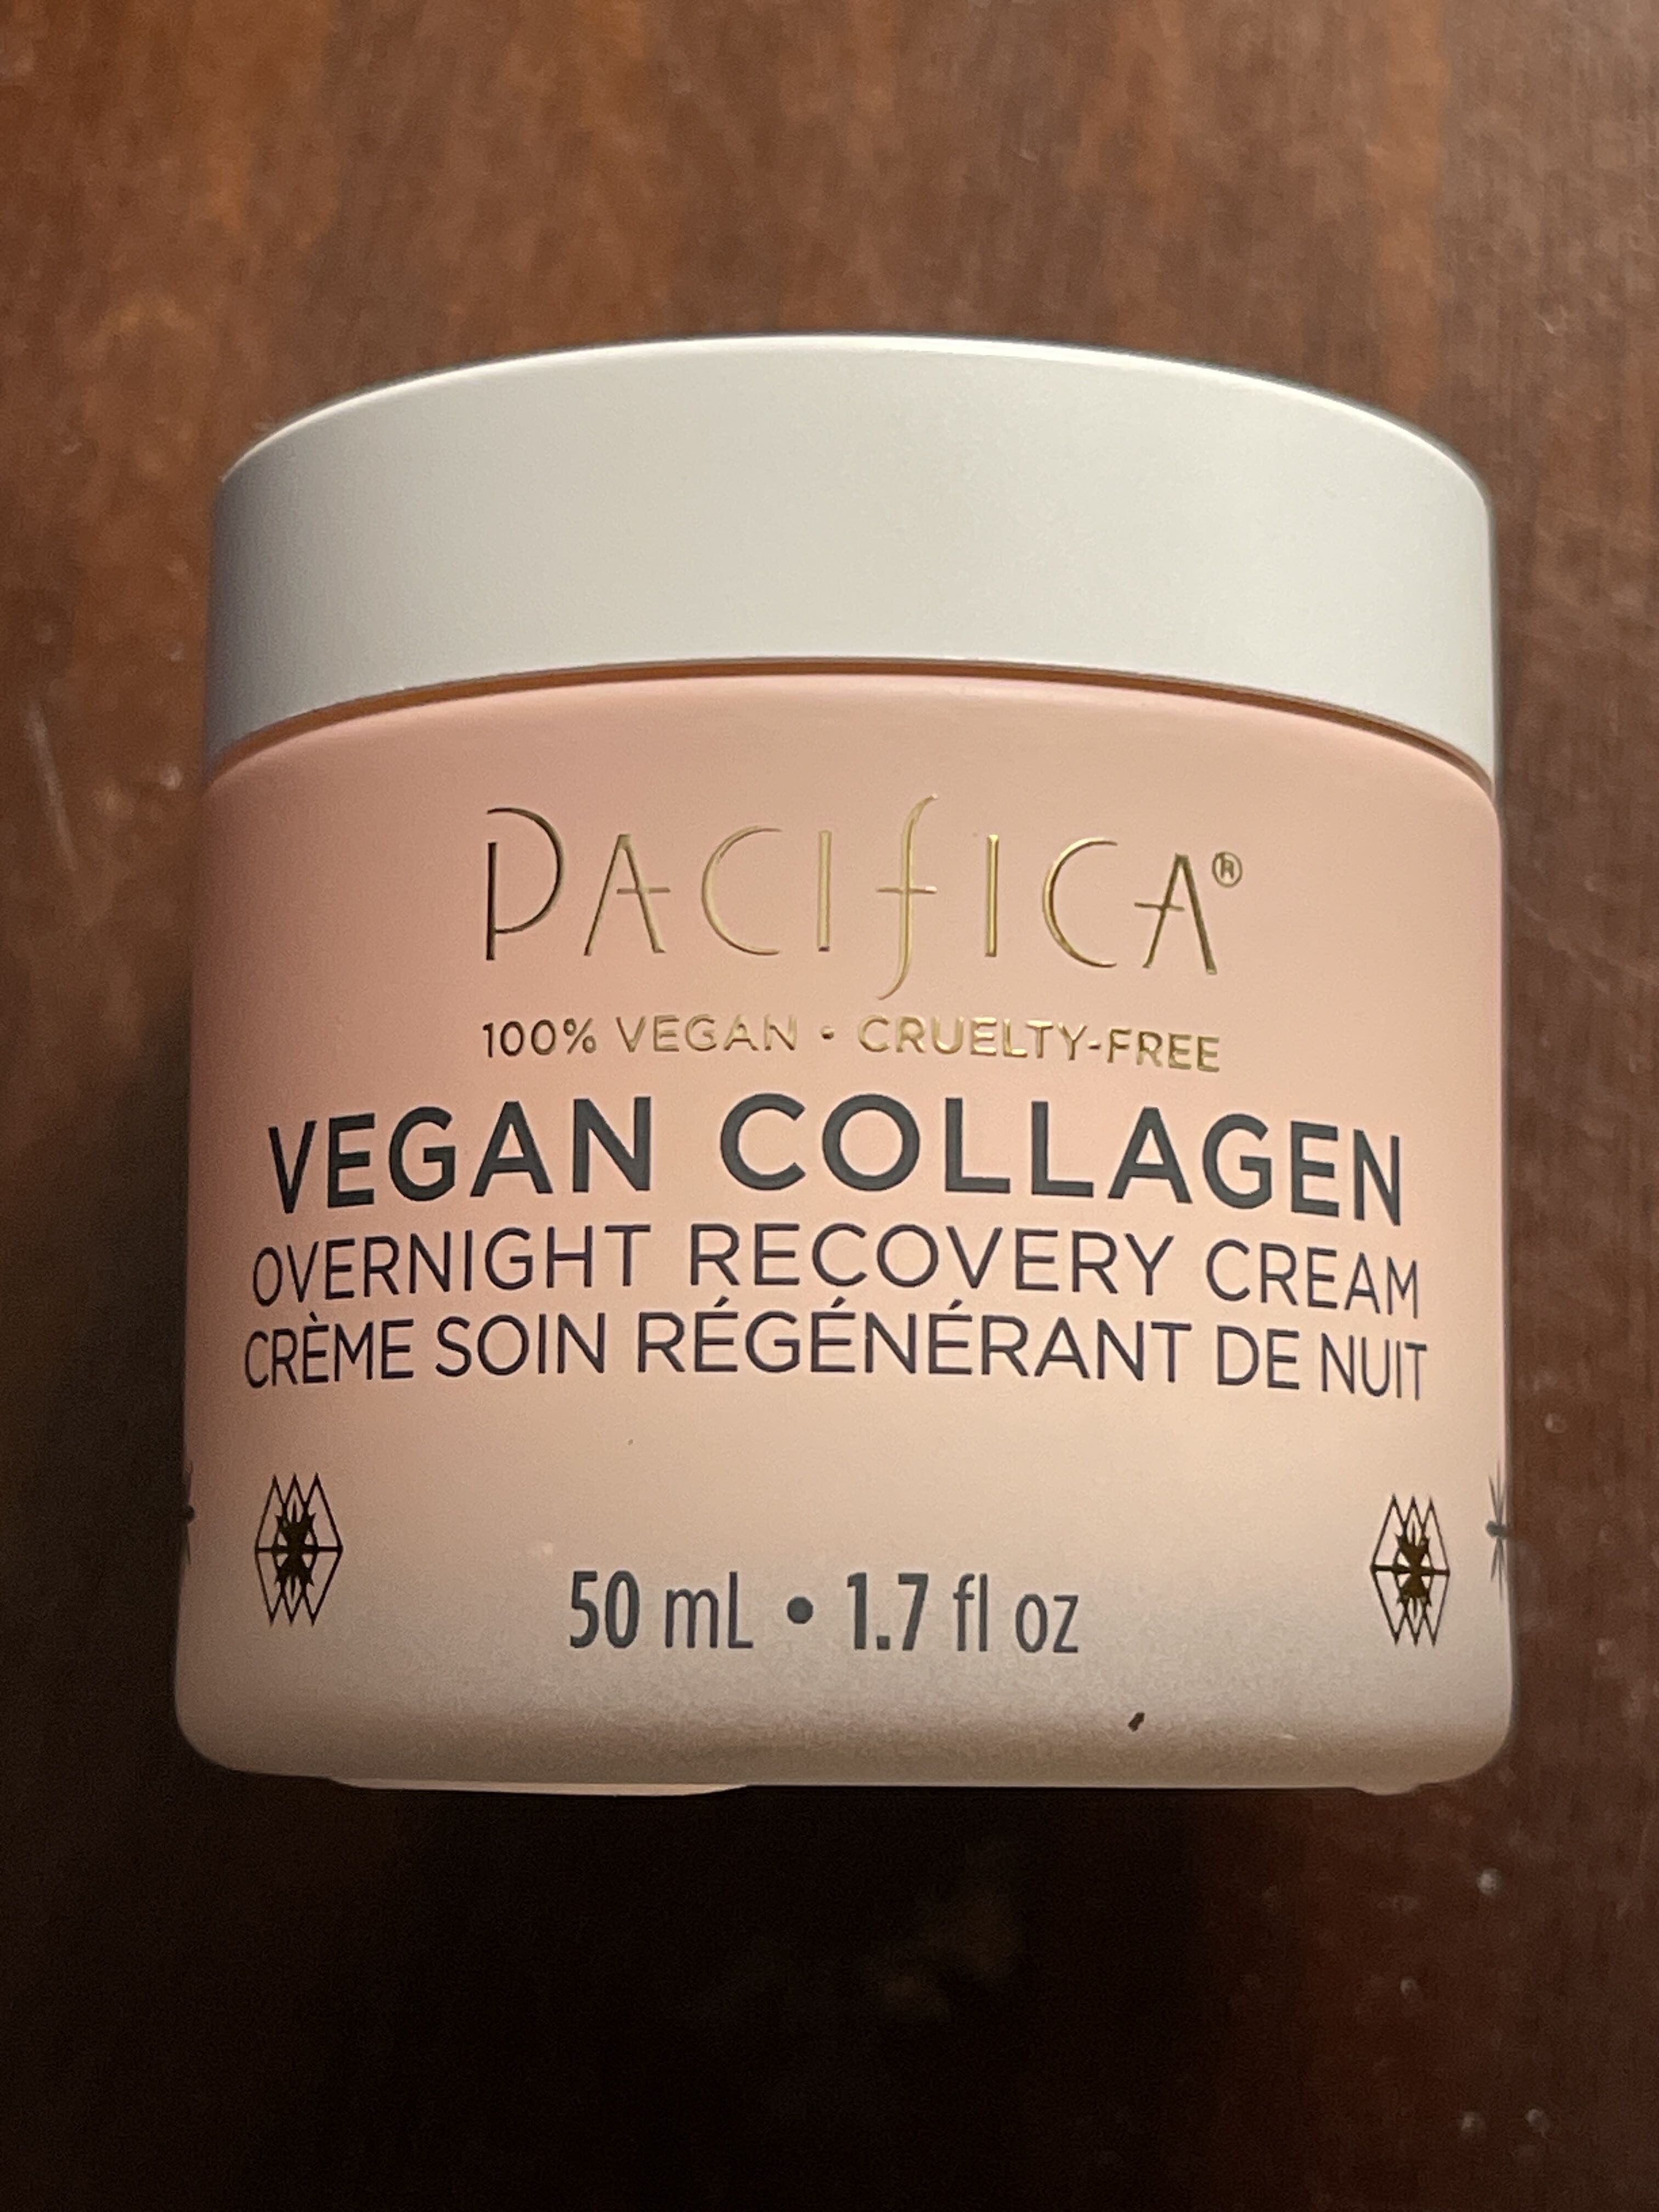 Vegan Collagen Overnight Recovery Cream - Produit - en